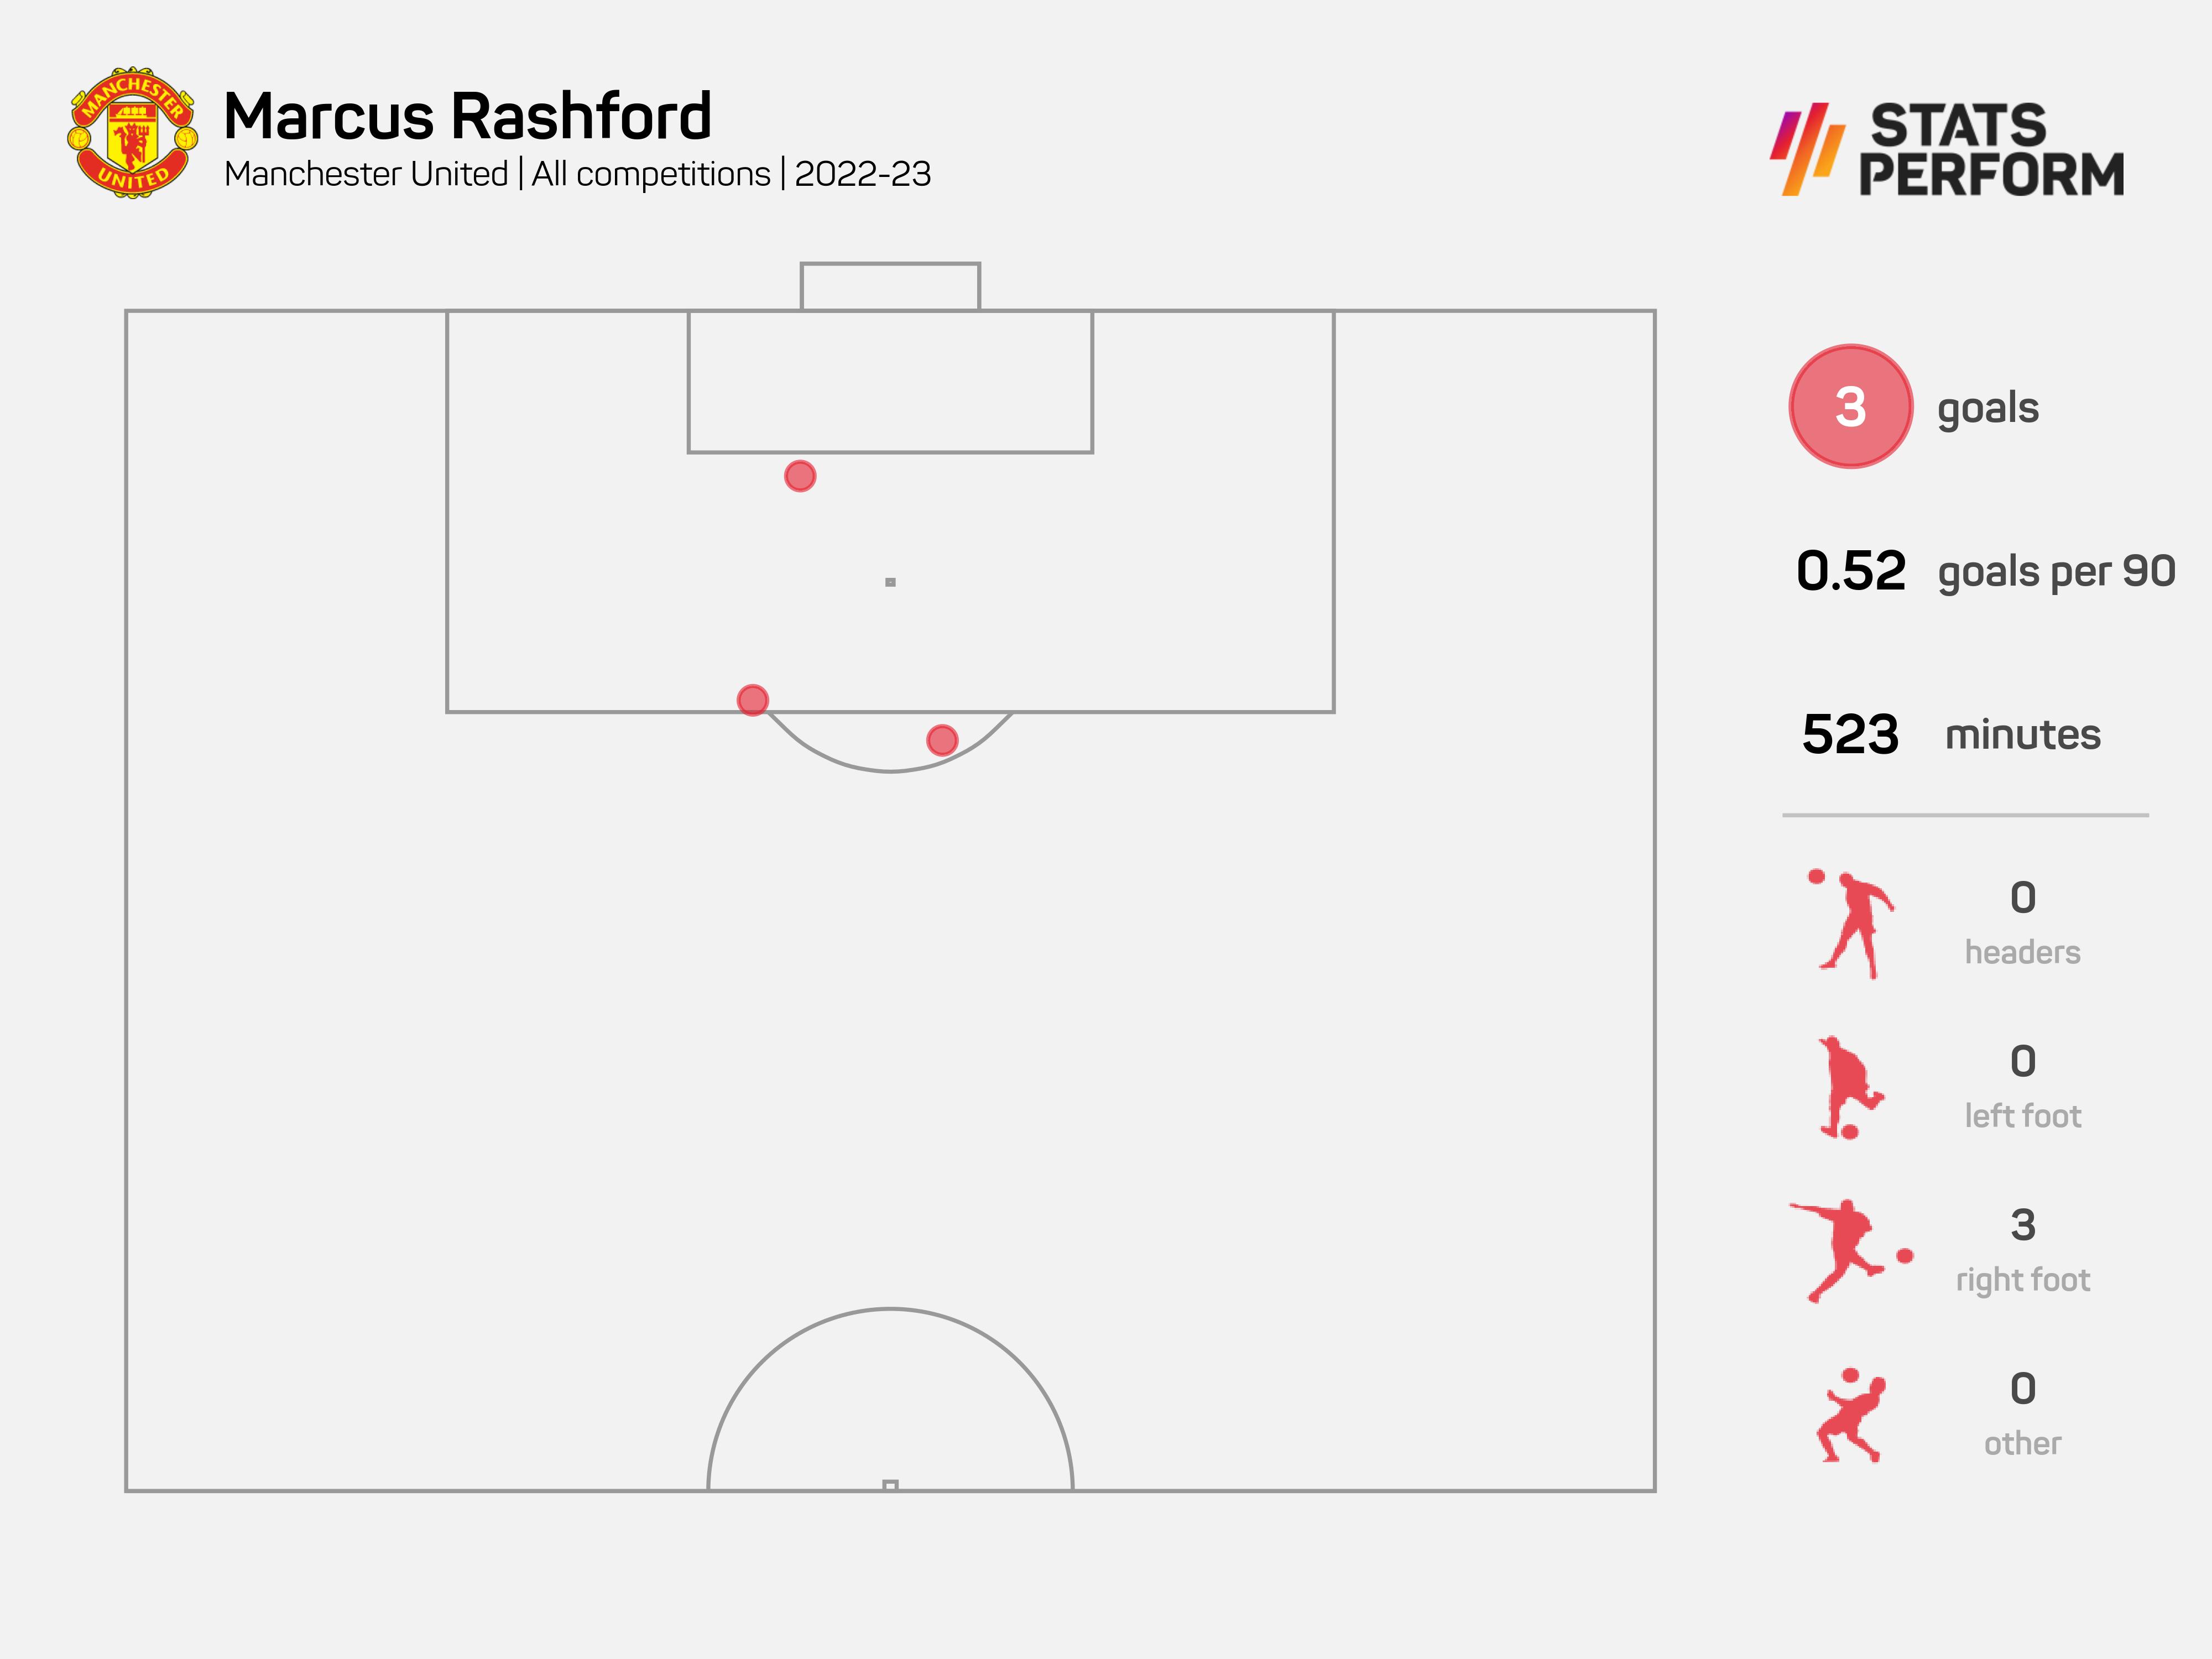 Marcus Rashford has three goals in six games